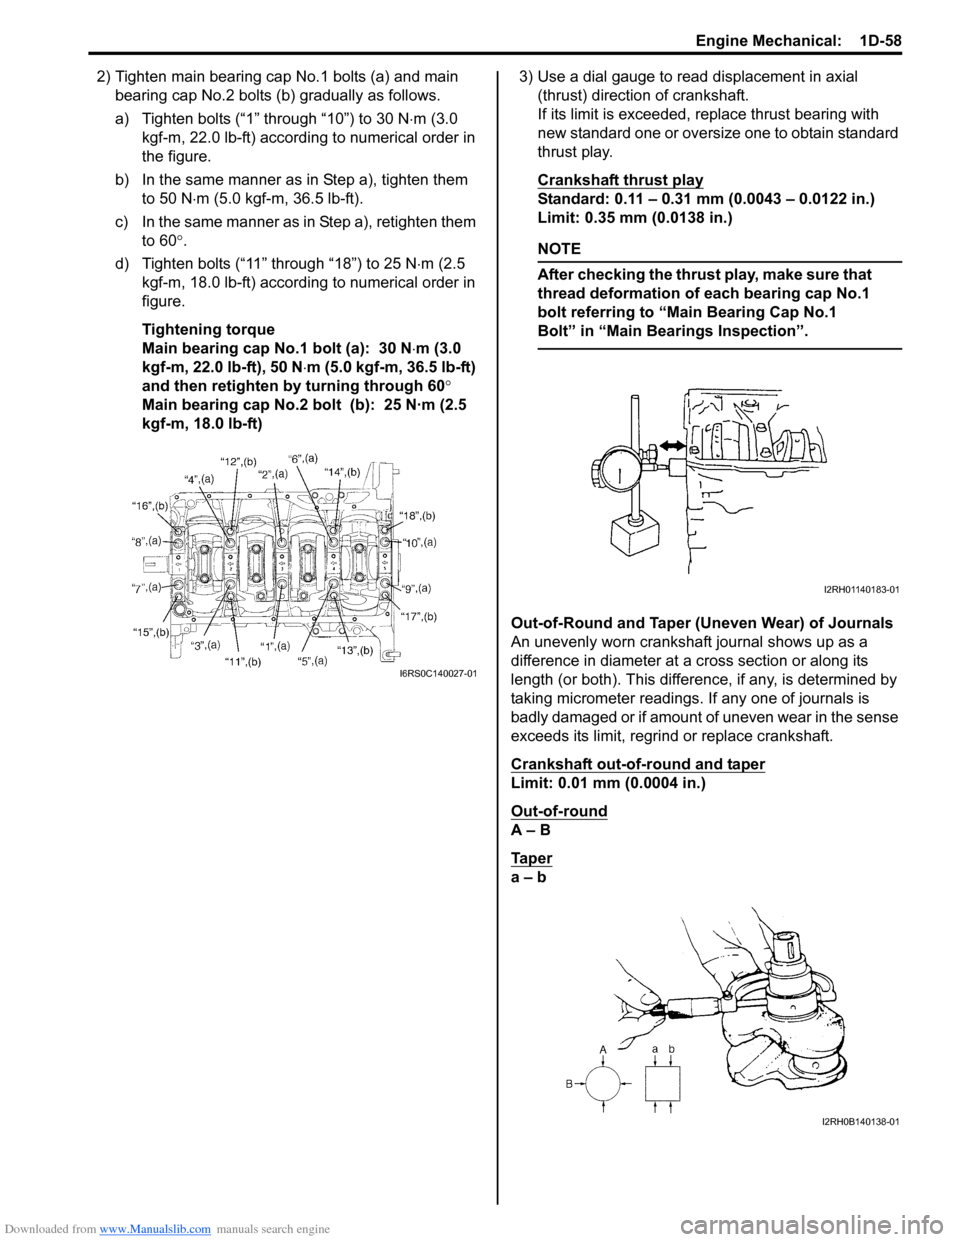 SUZUKI SWIFT 2005 2.G Service Service Manual Downloaded from www.Manualslib.com manuals search engine Engine Mechanical:  1D-58
2) Tighten main bearing cap No.1 bolts (a) and main bearing cap No.2 bolts (b ) gradually as follows.
a) Tighten bolt